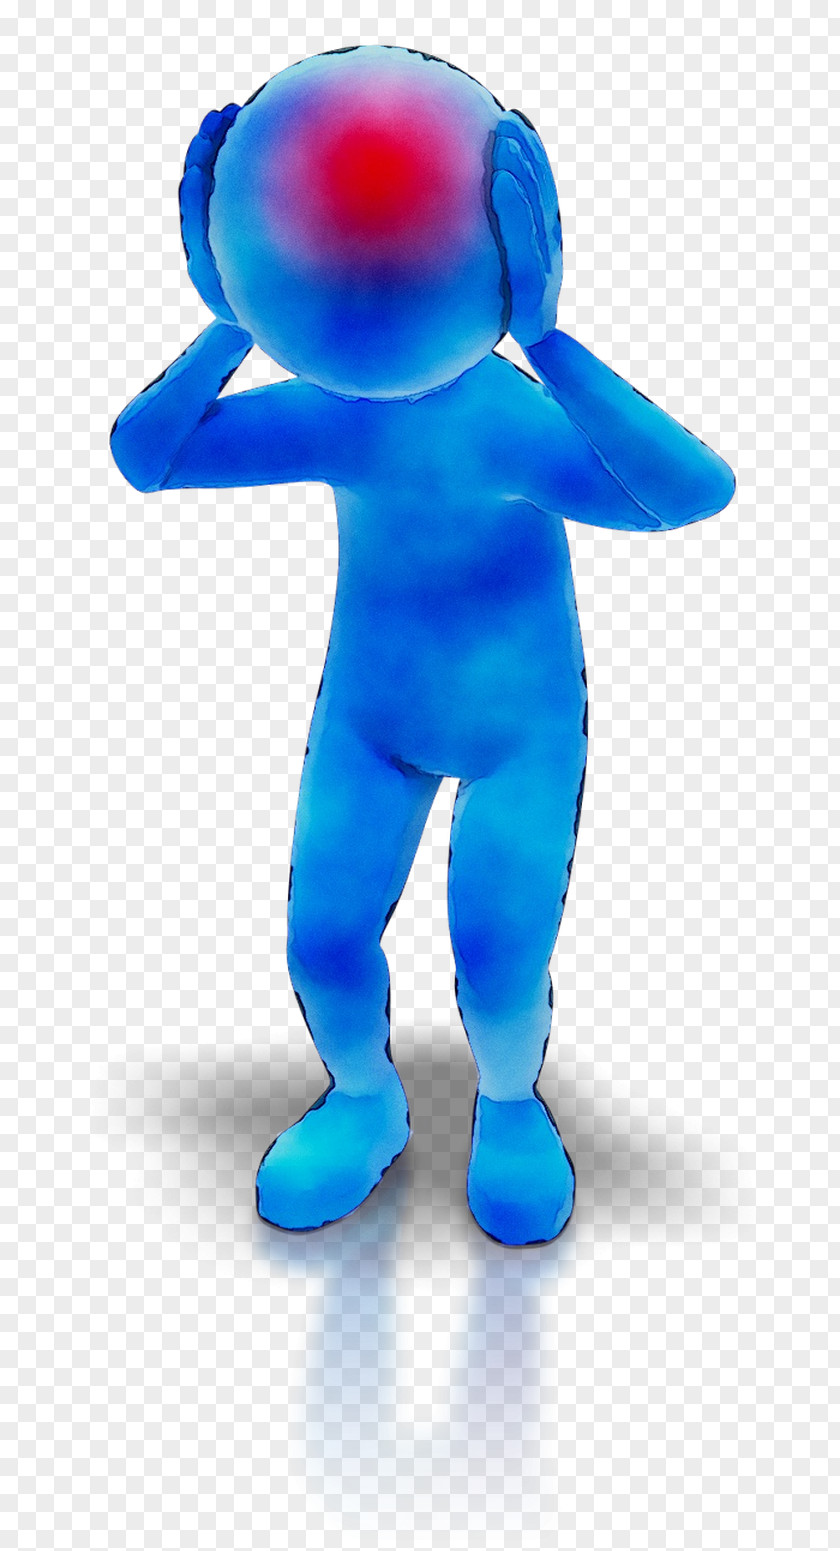 Organism Mascot Figurine PNG